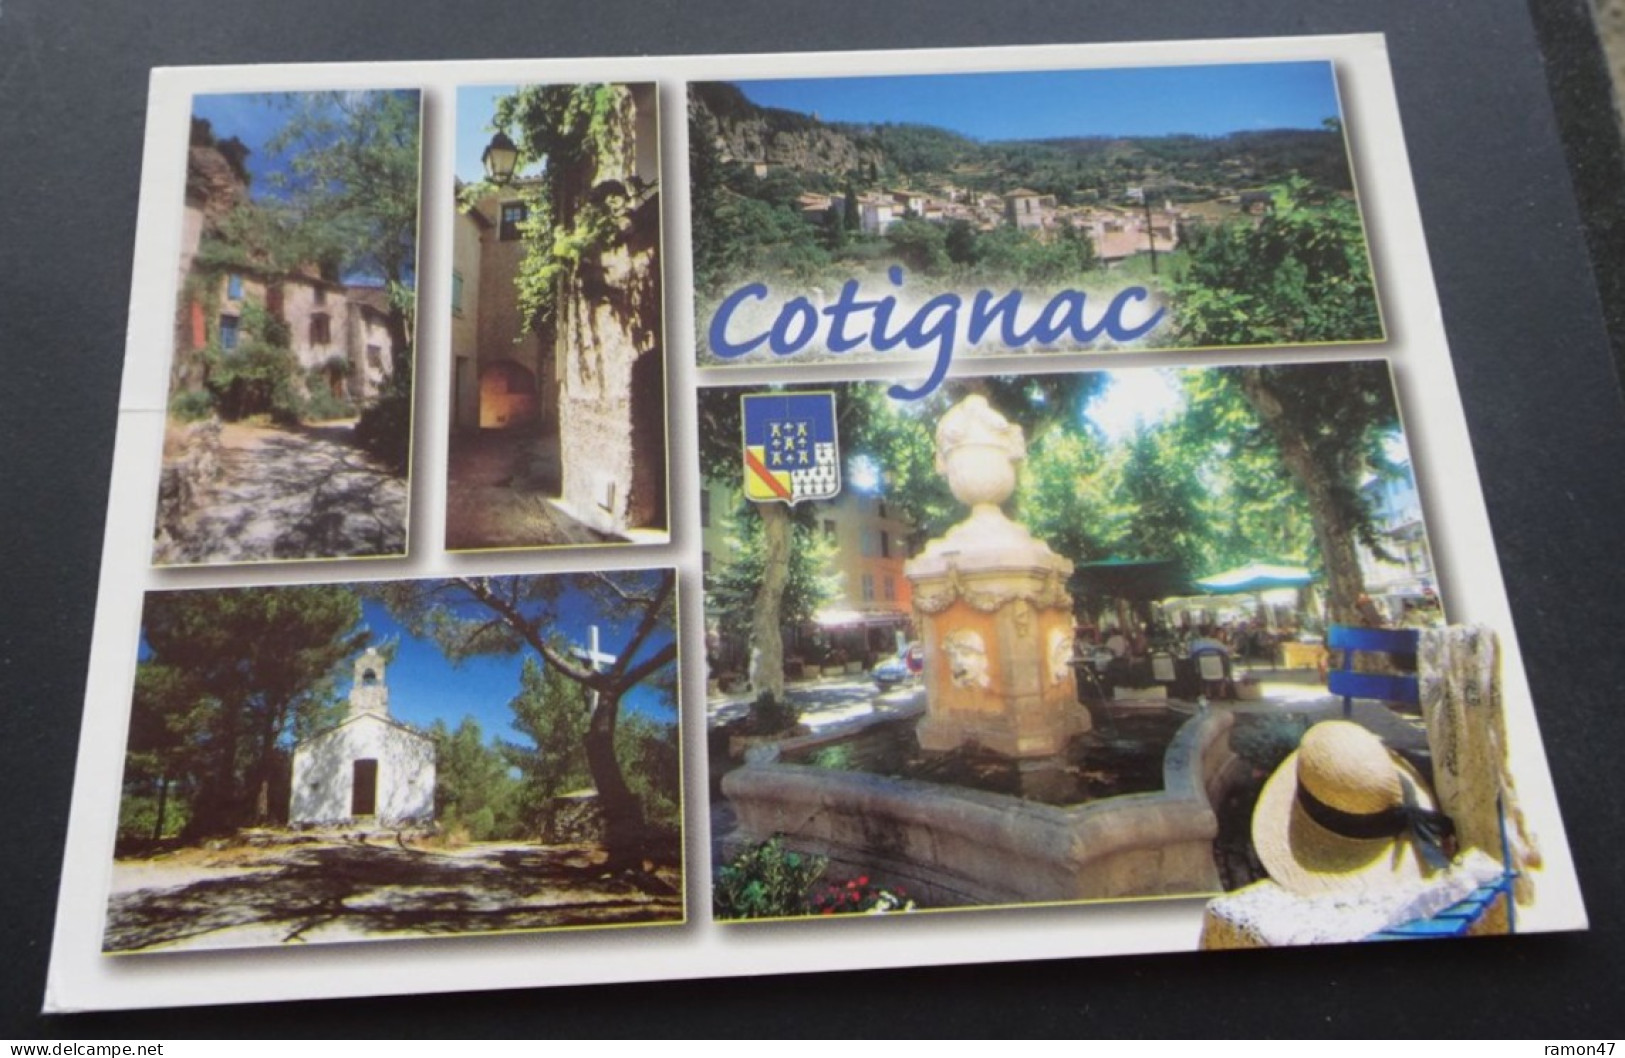 Cotignac (Var) - Editions Photoguy, Roquefort-les-Pins - Cotignac